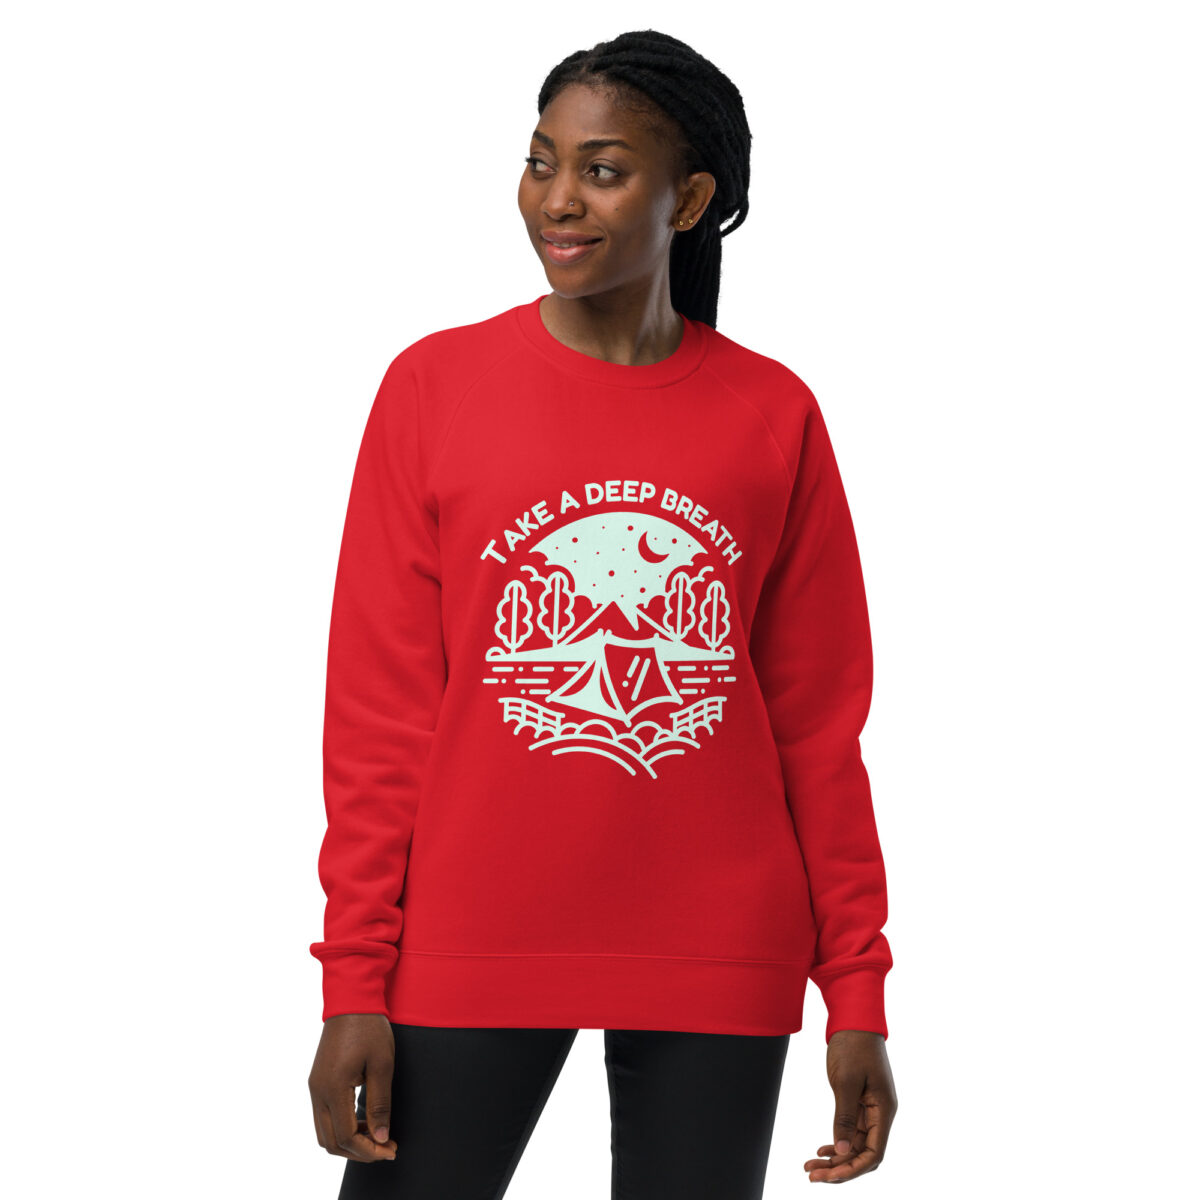 unisex raglan sweatshirt red front 643fad4fbef47